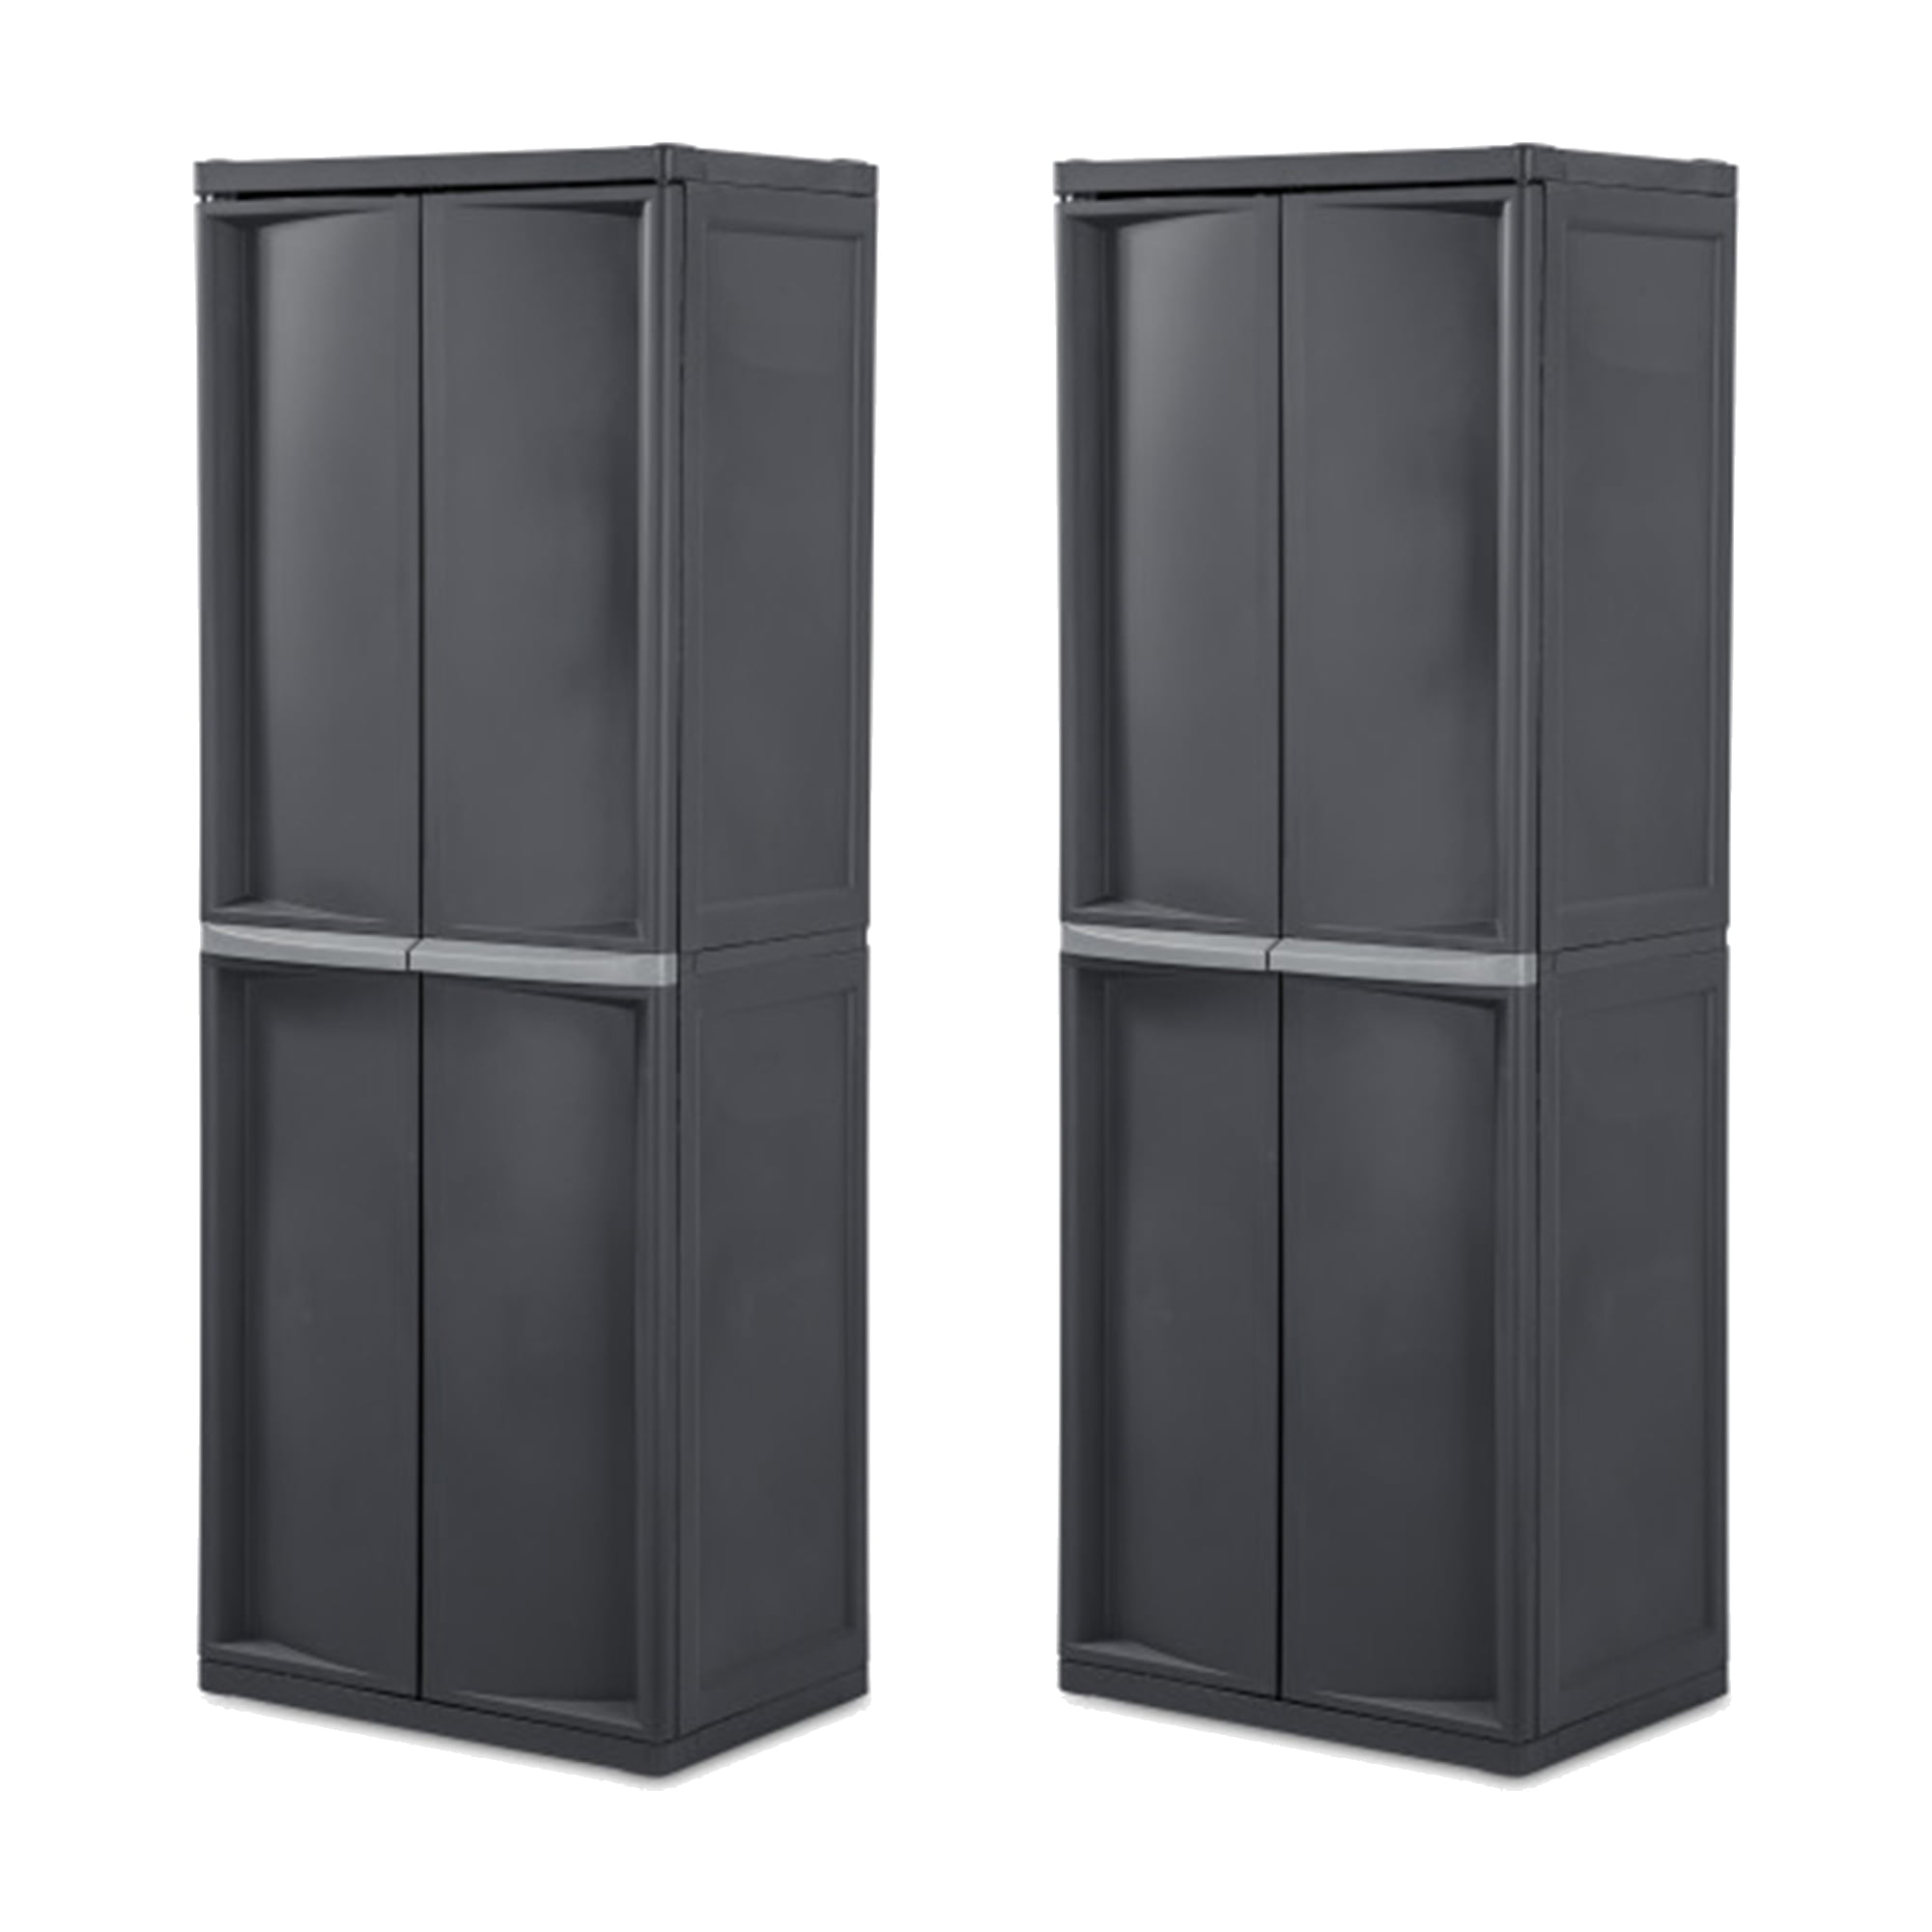 Sterilite Adjule 4 Shelf Gray Garage Storage Cabinet With Doors 2 Pack Com